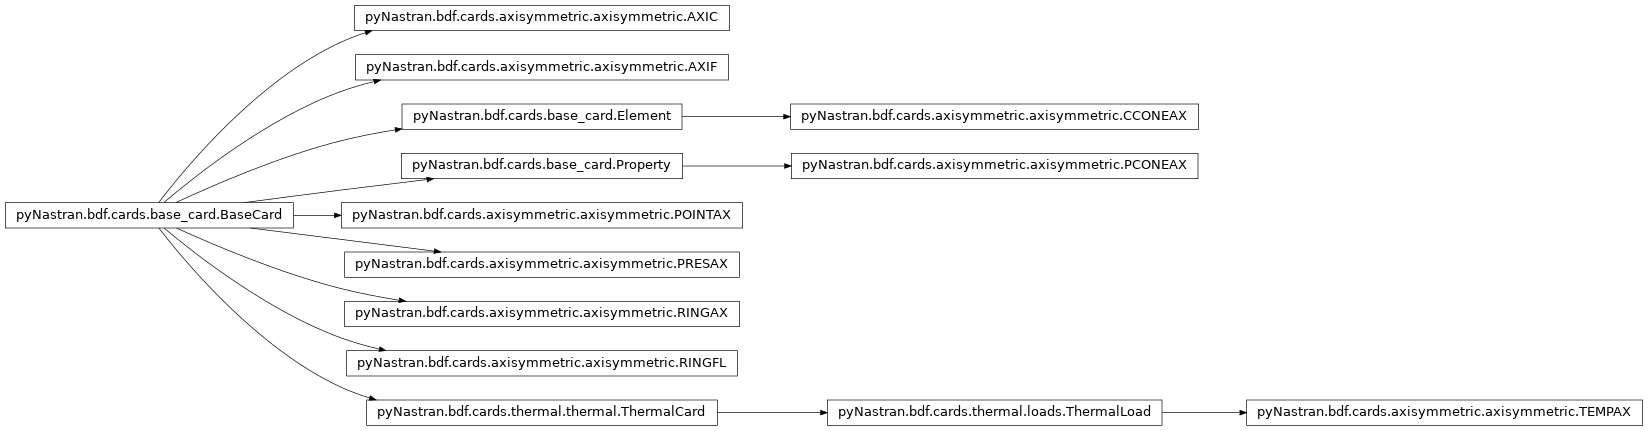 Inheritance diagram of pyNastran.bdf.cards.axisymmetric.axisymmetric